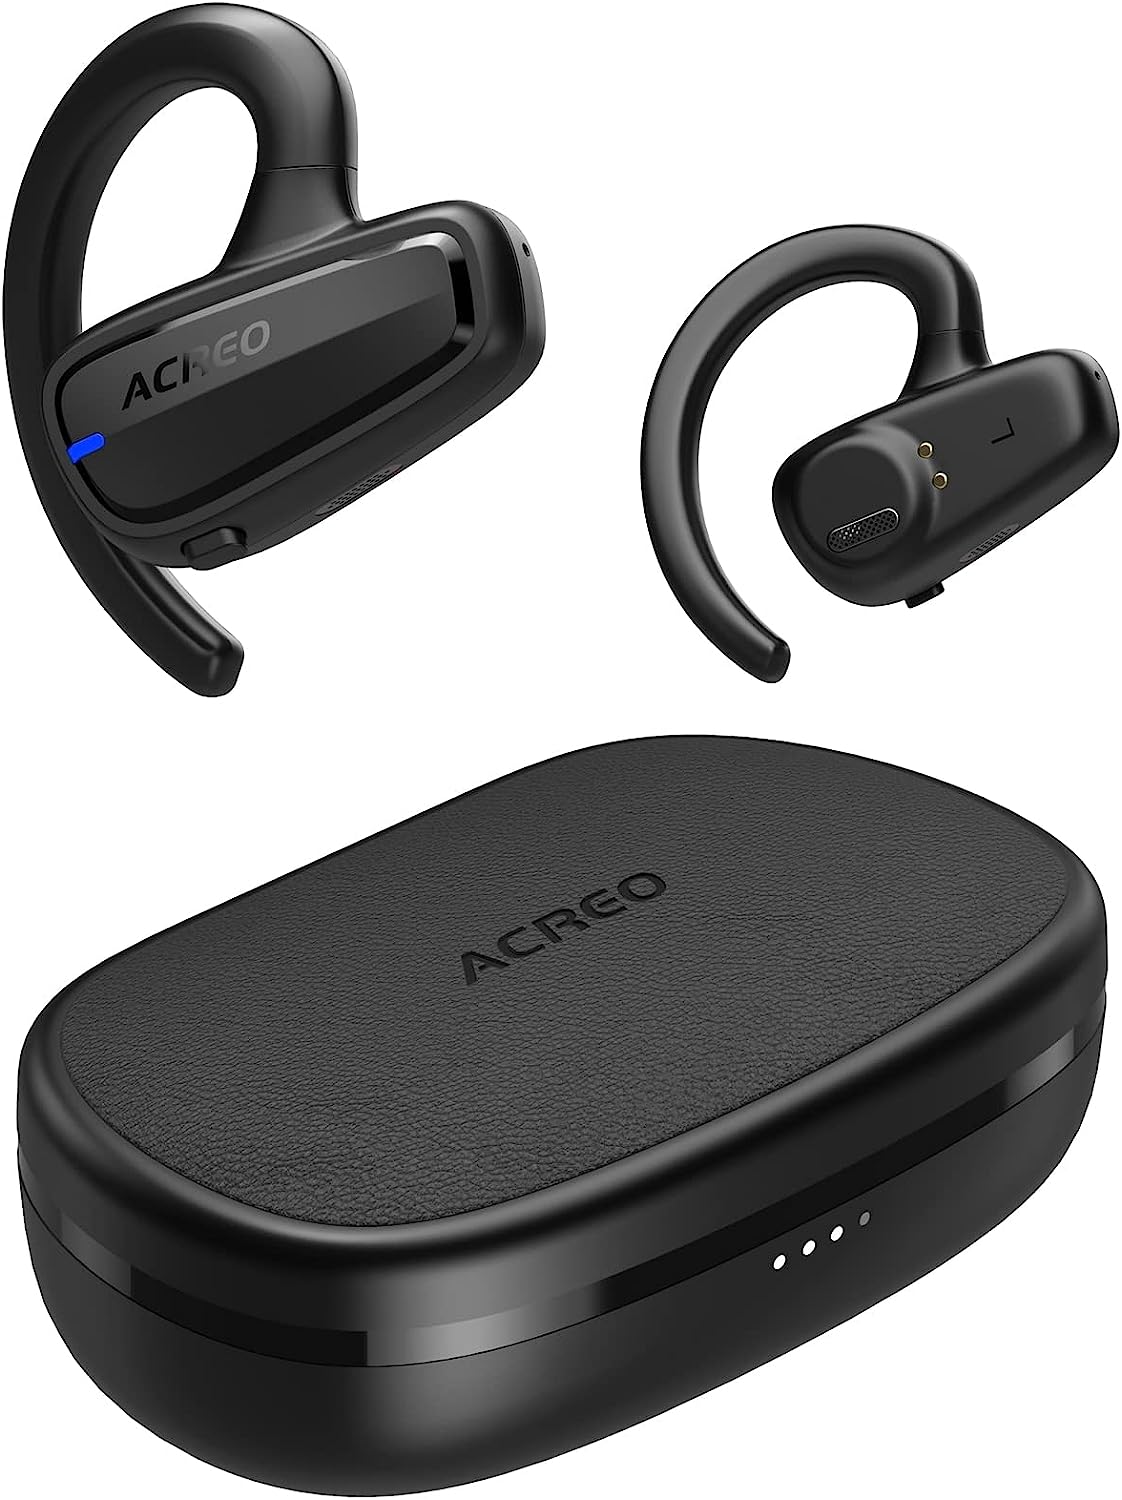 ACREO The Next Generation Open Ear Headphones - $35